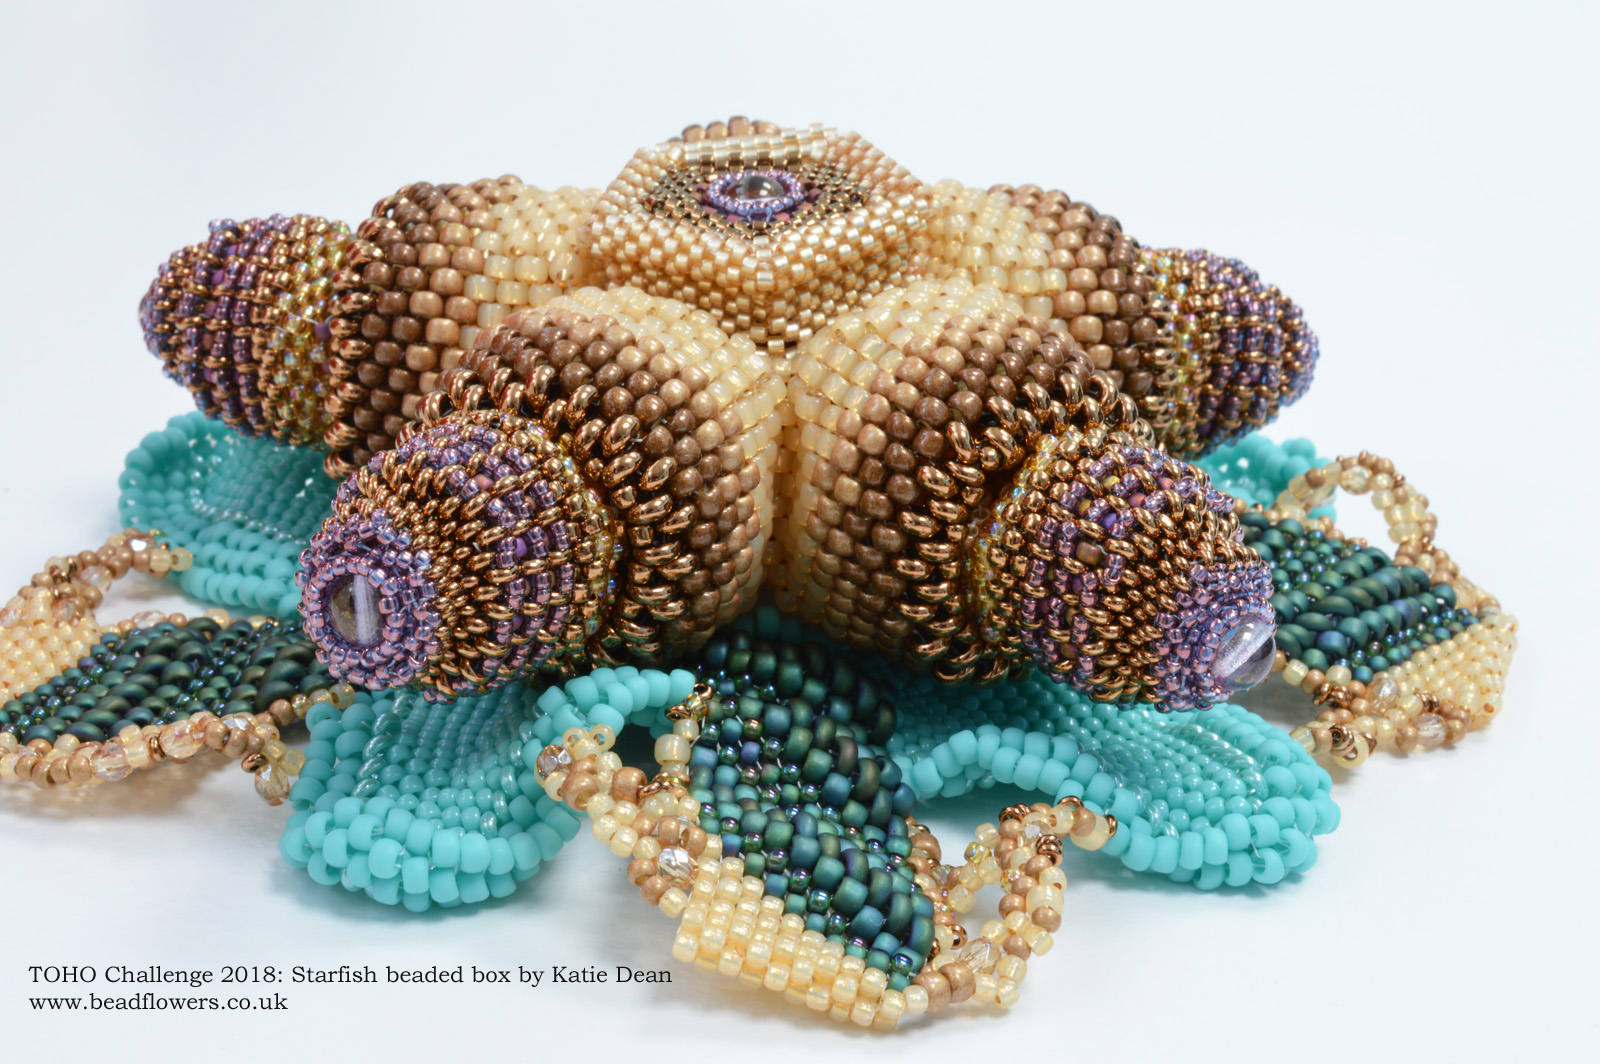 Beads & Seeds: A STEAM Design Challenge